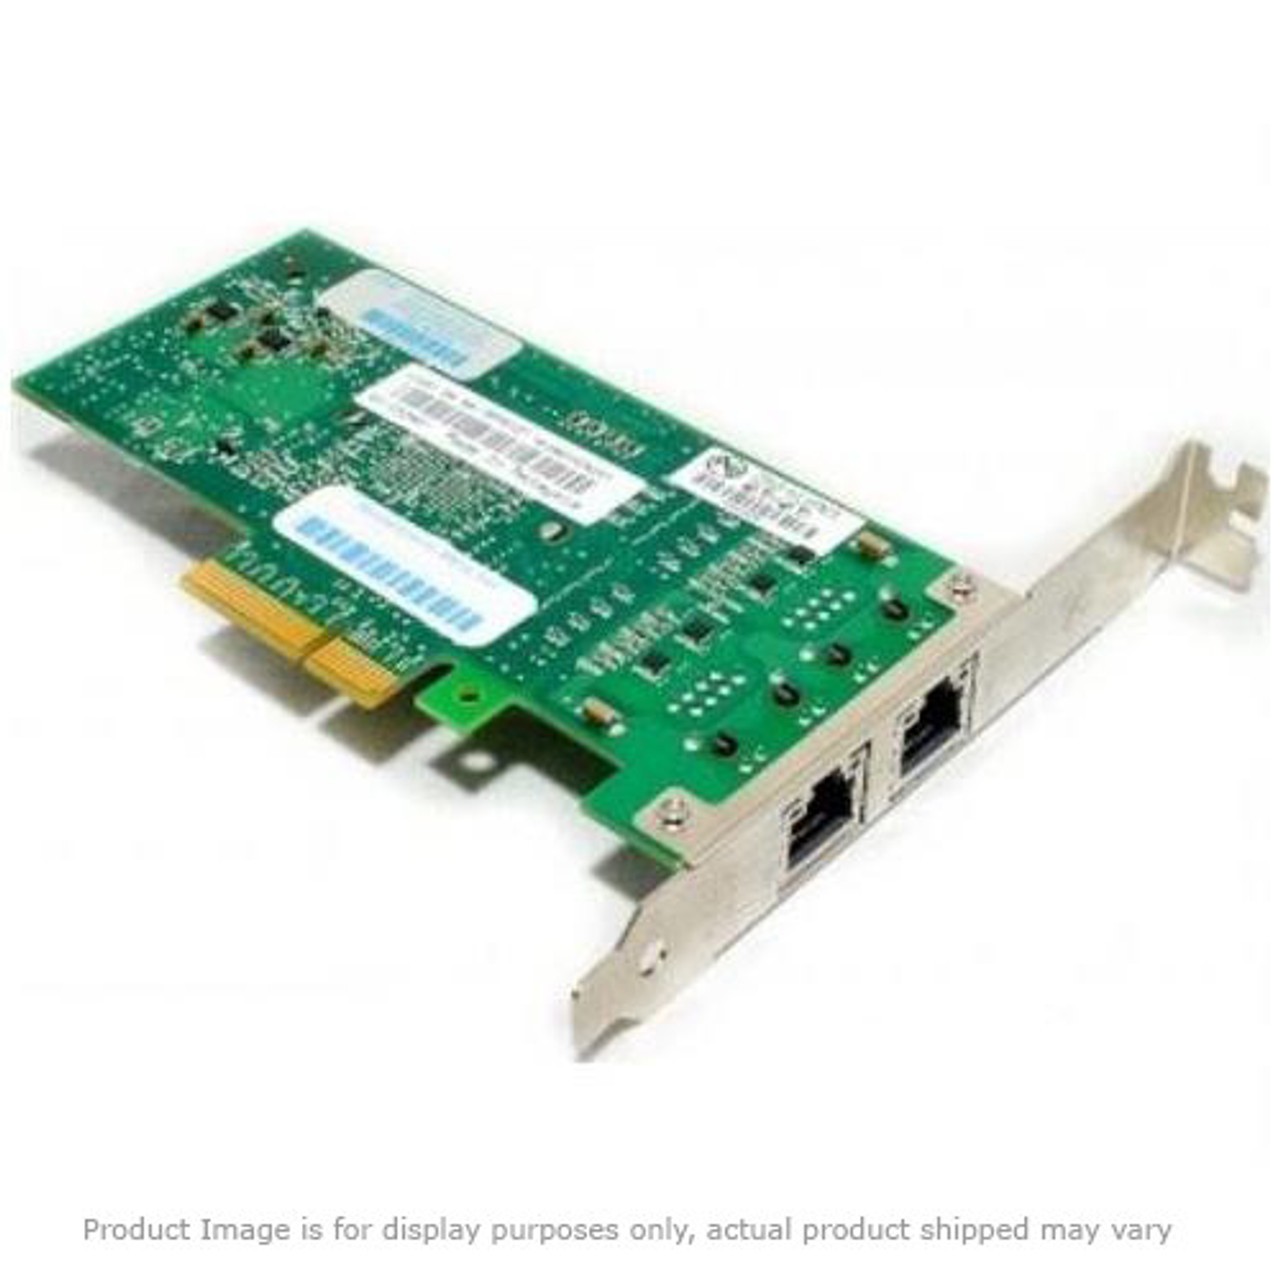 A44064-004 Intel 10/100 PCI Network Interface Card